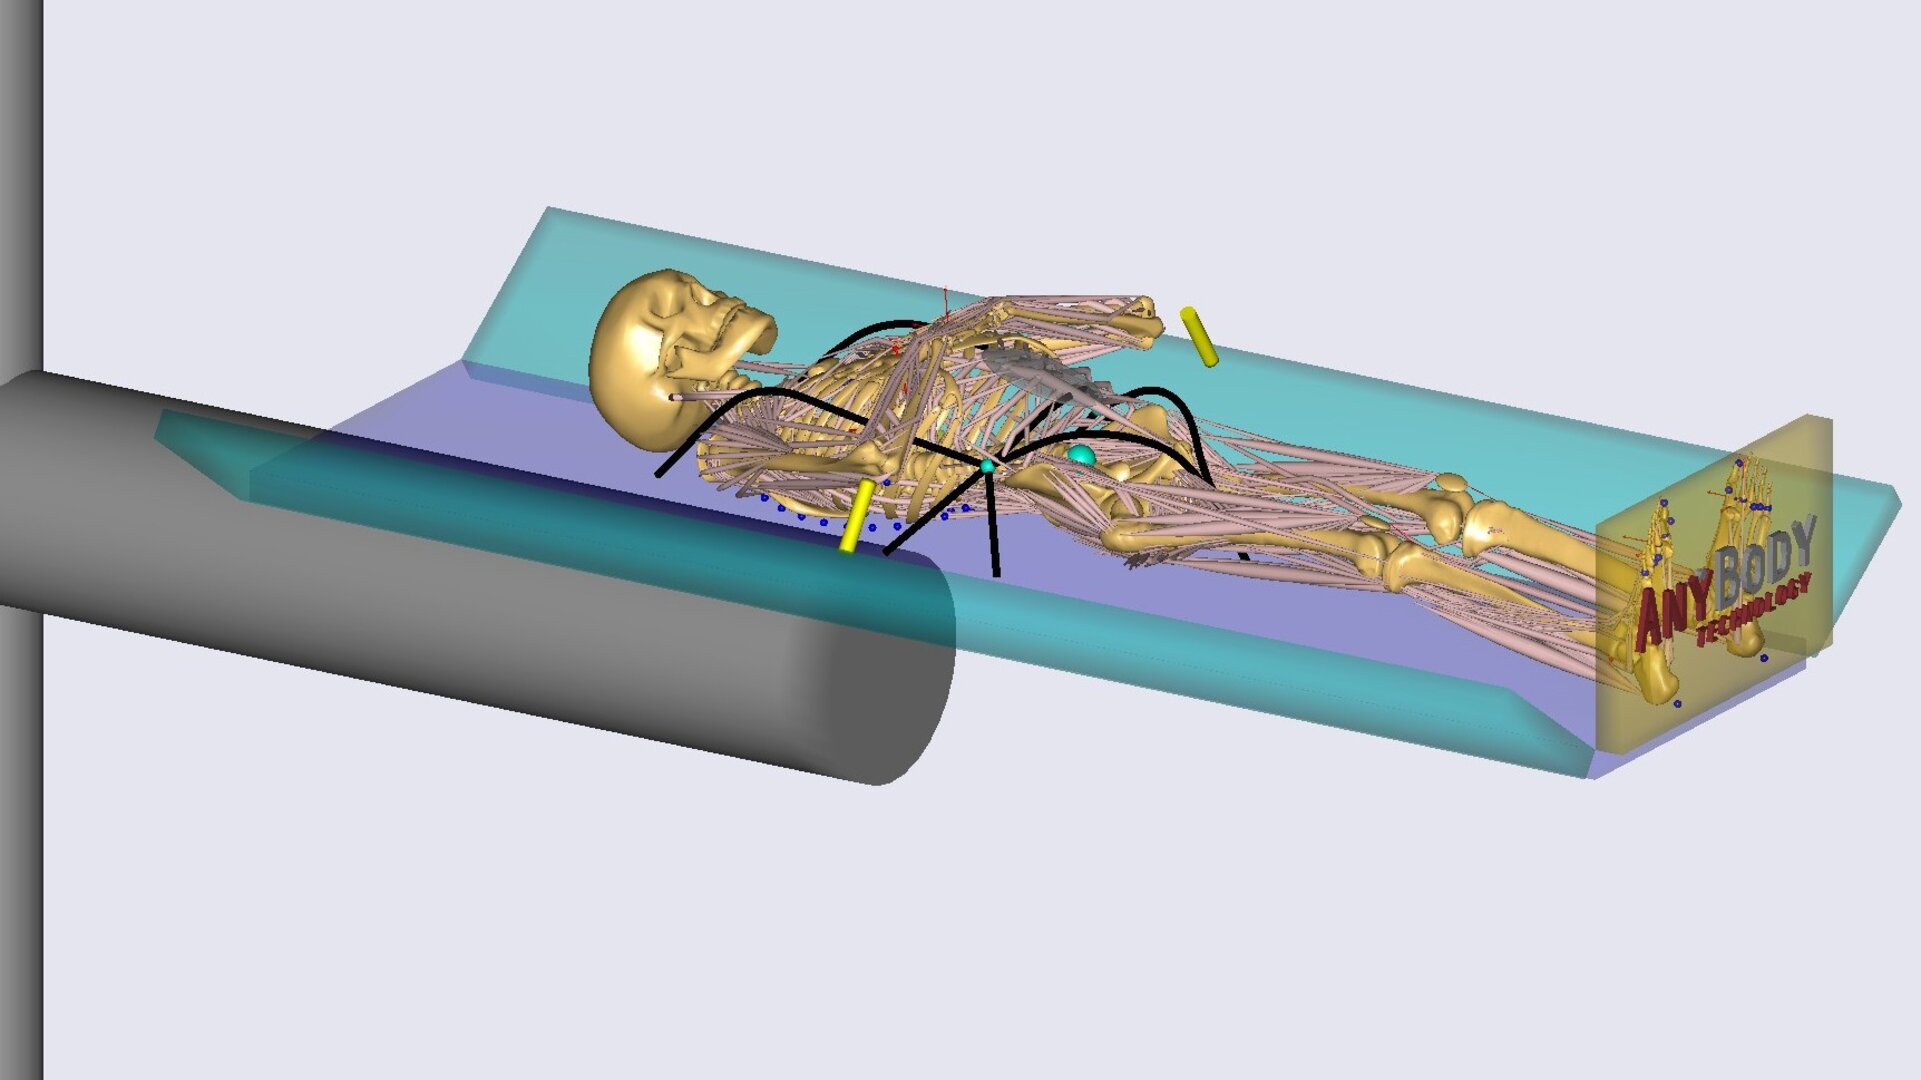 AnyBody musculo-skeletal model on human centrifuge